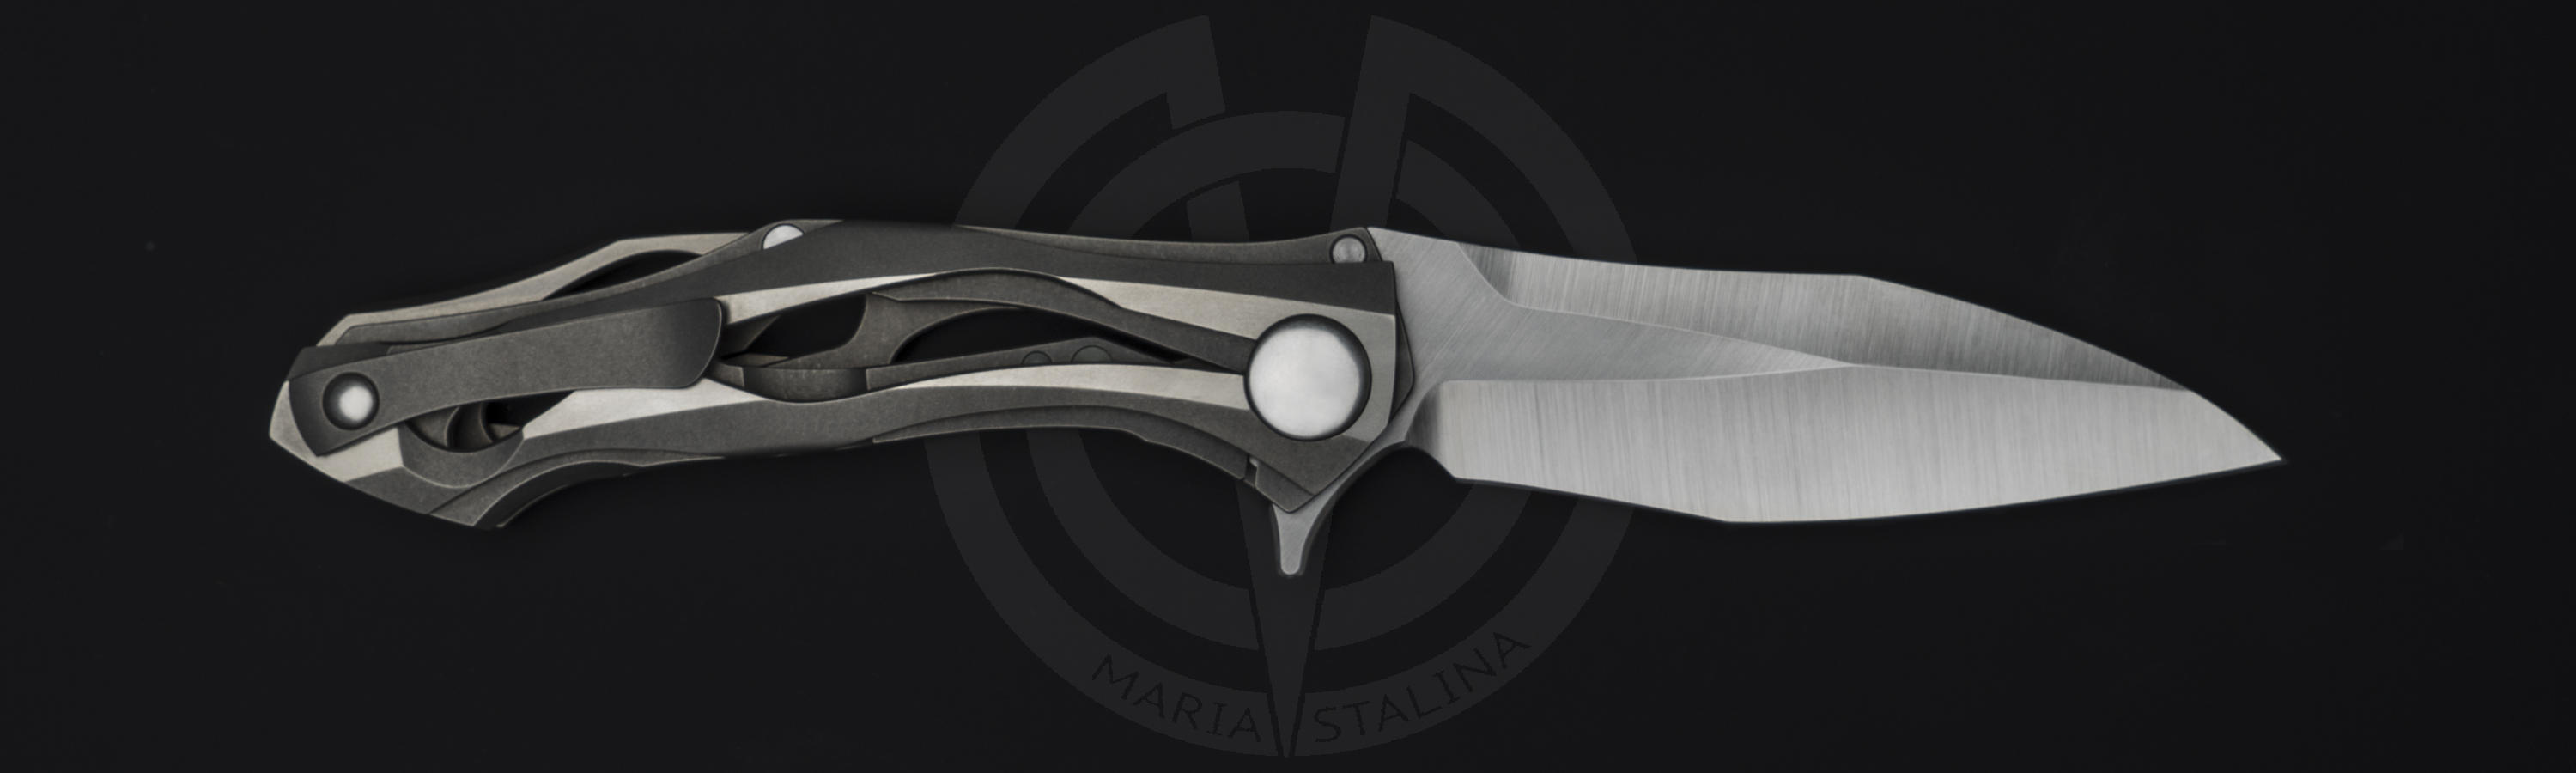 Steel M390 blade